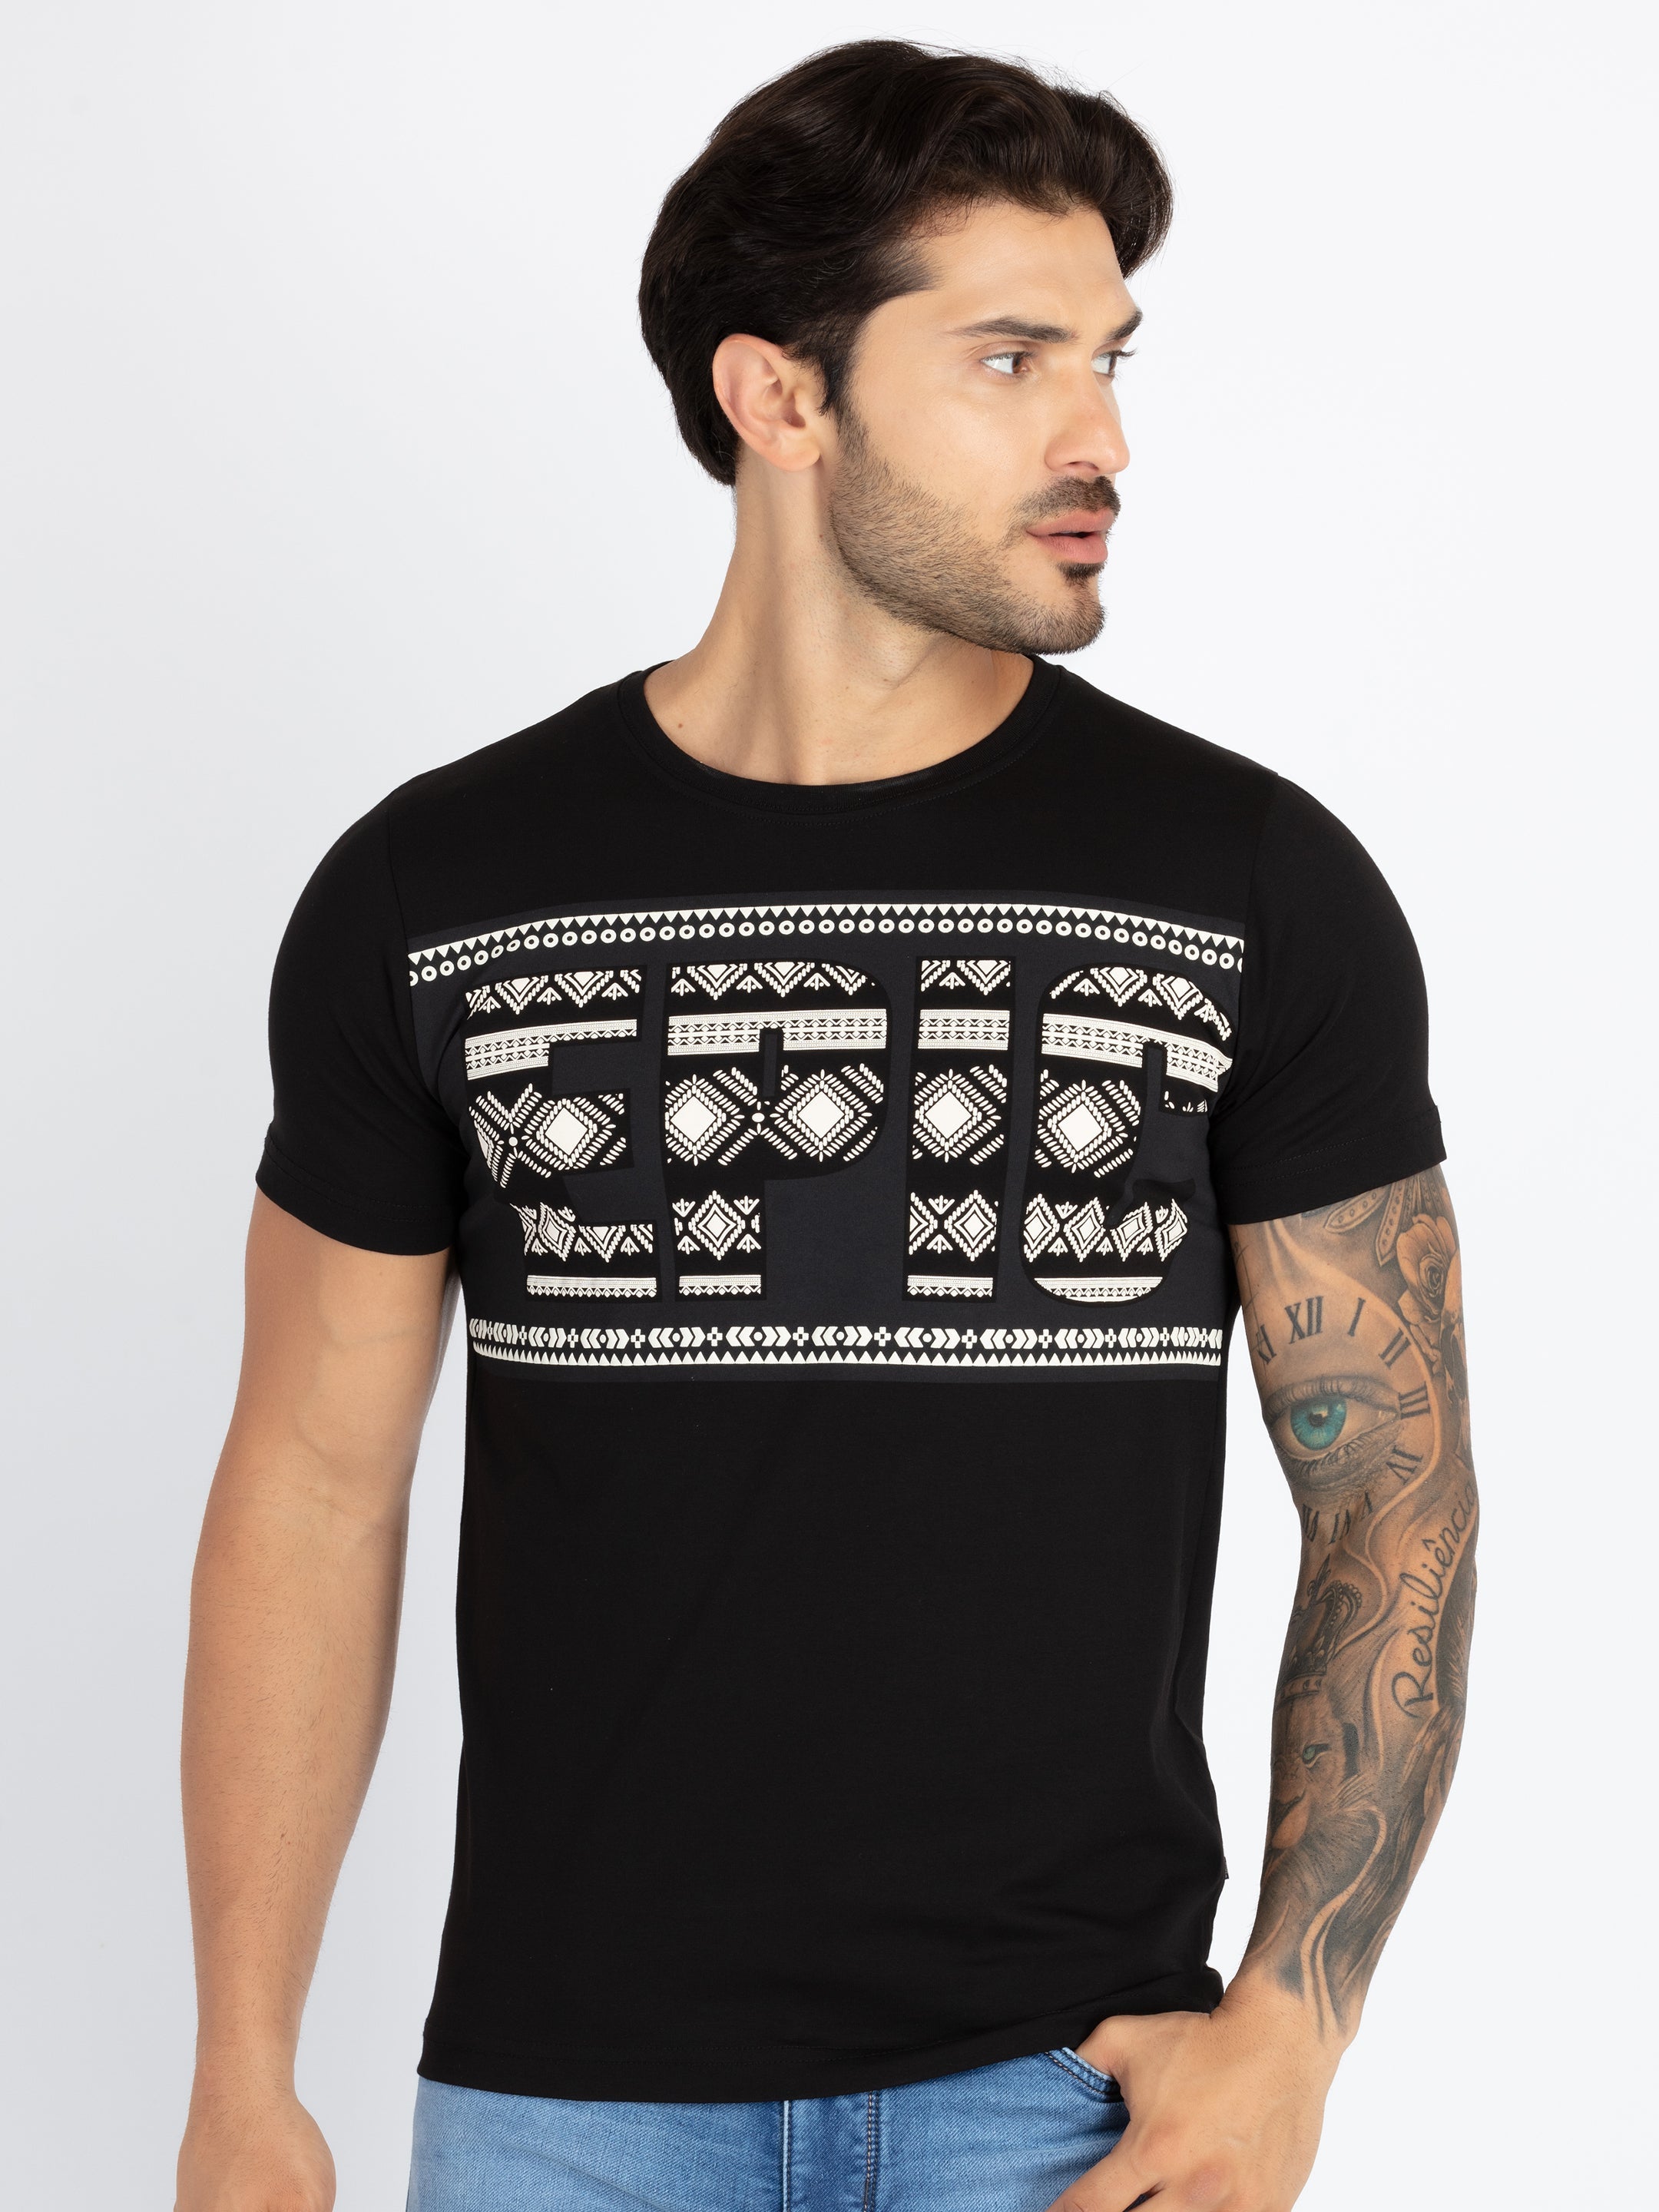 Status Quo |Men's Printed T-shirt - S, M, L, XL, XXL